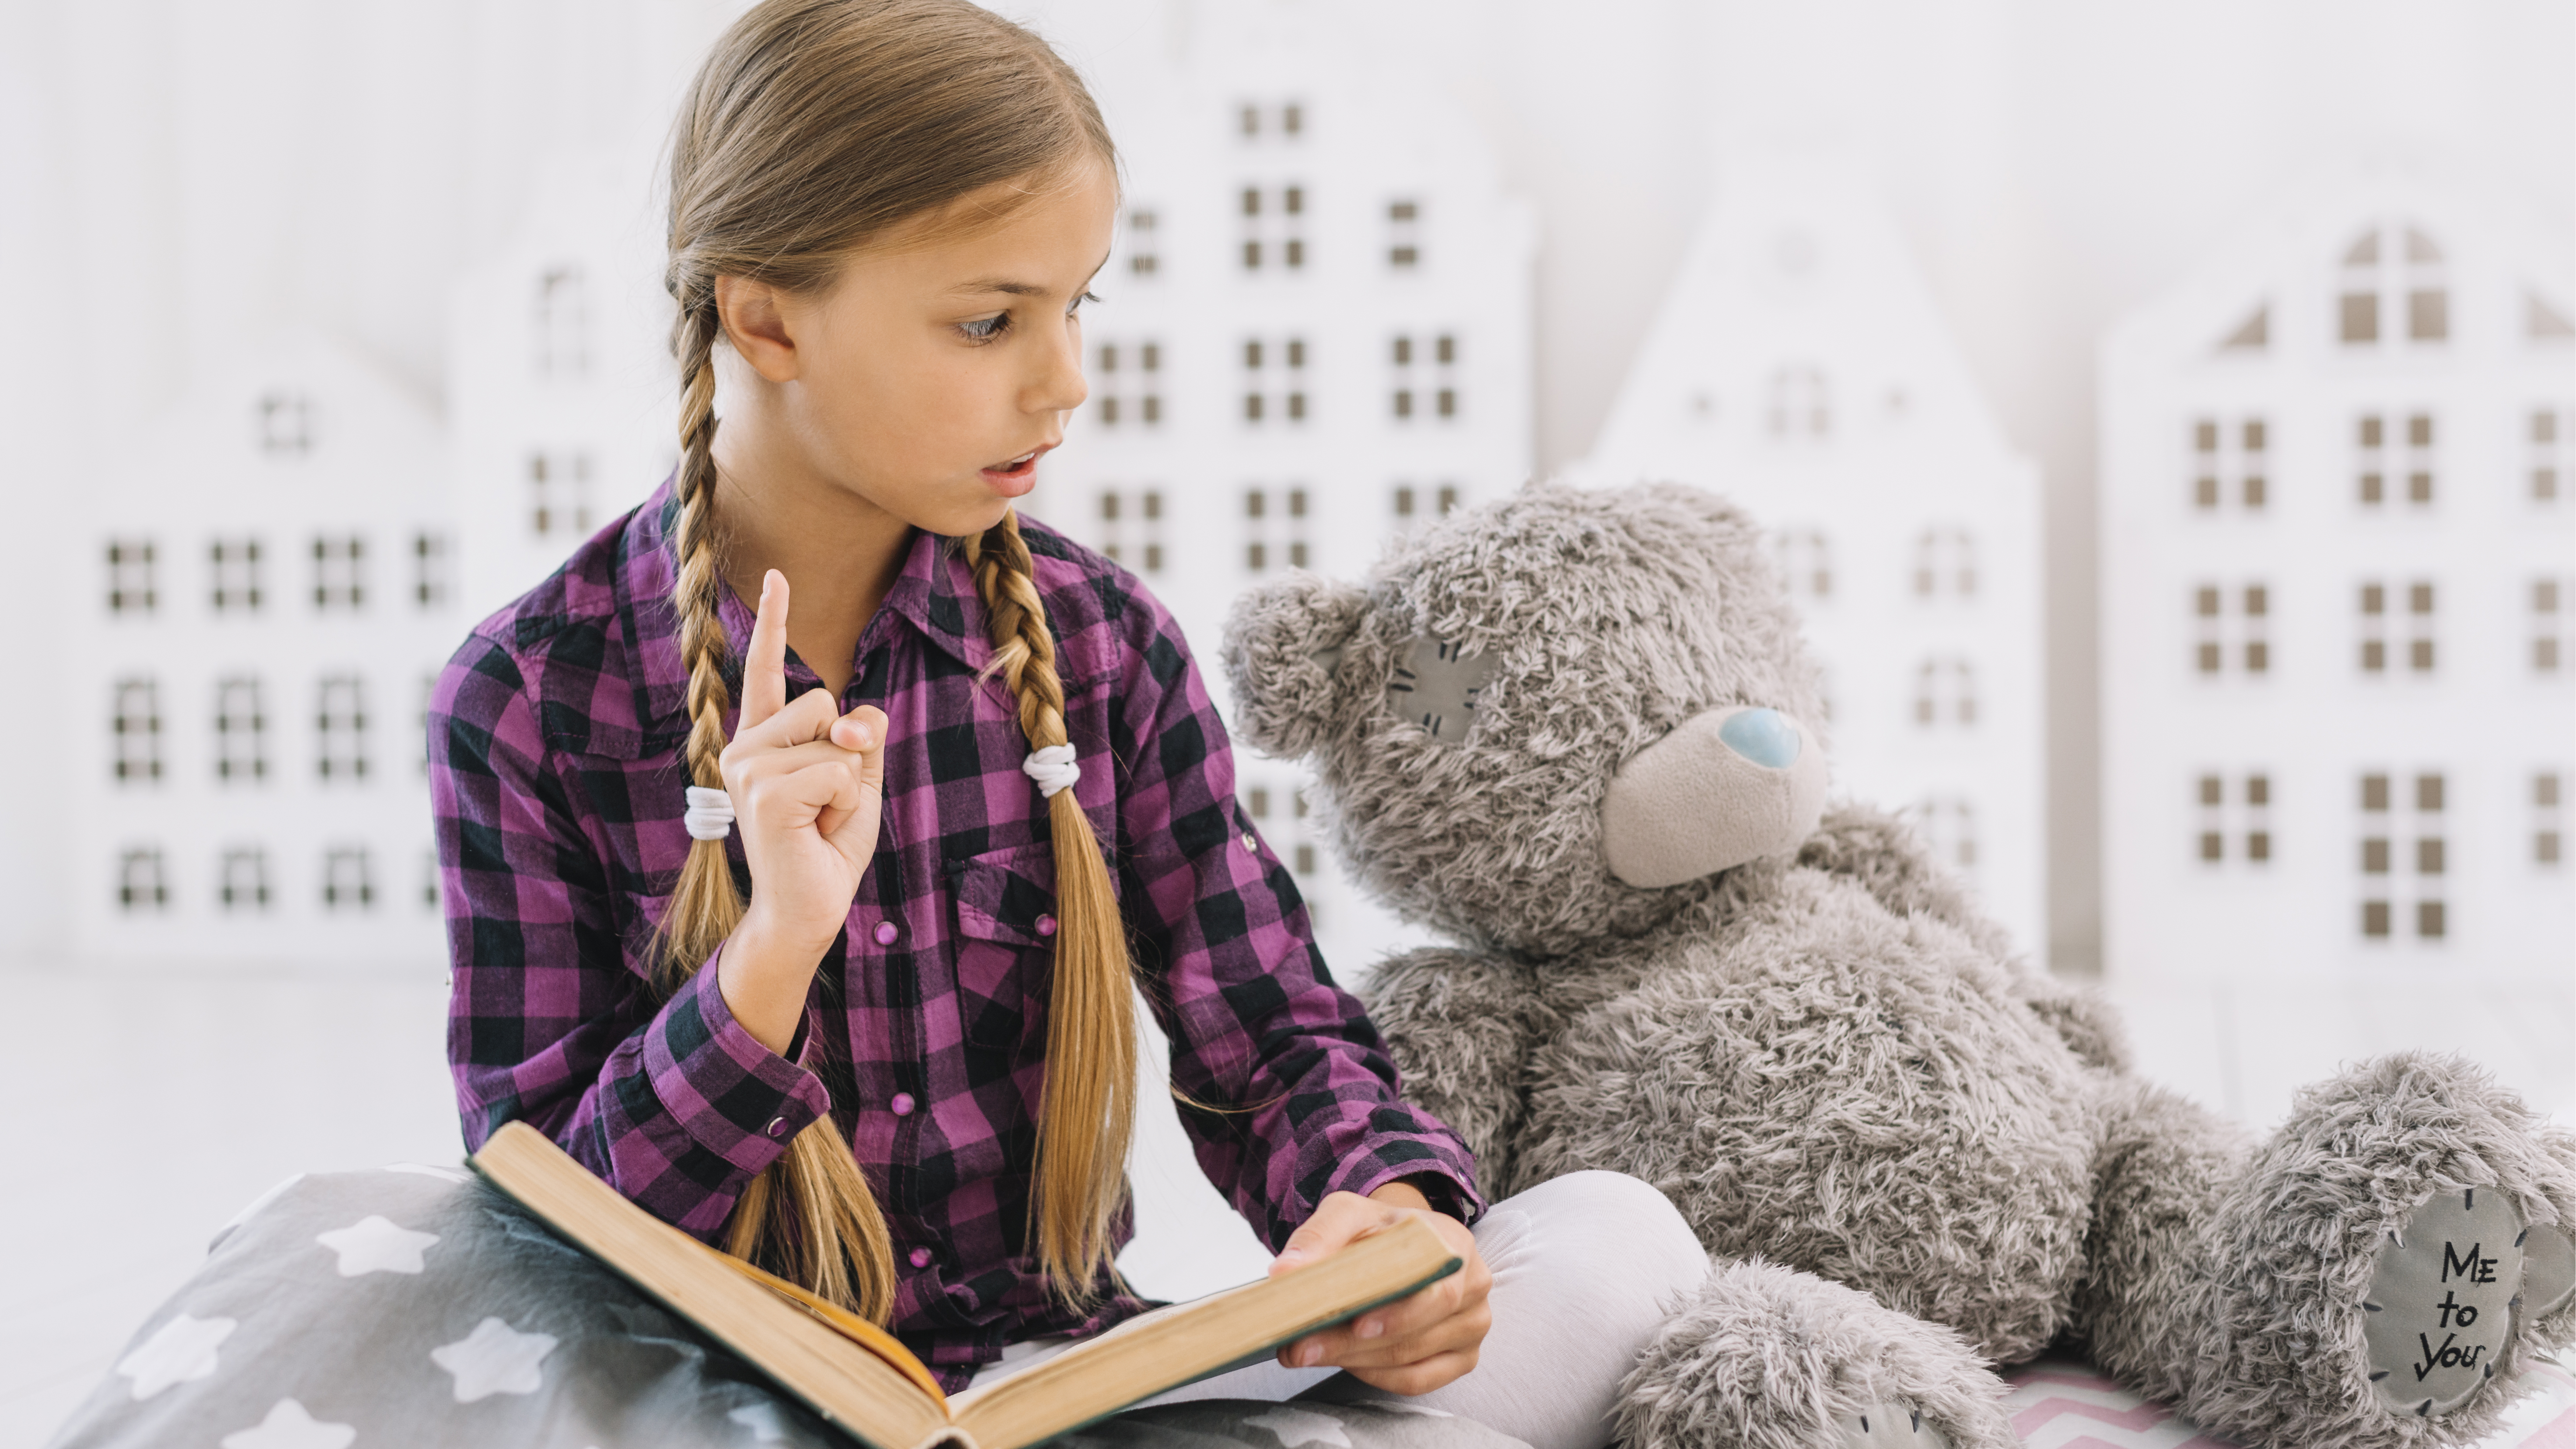 Психолог объяснил снижение тенденции чтения книг среди детей